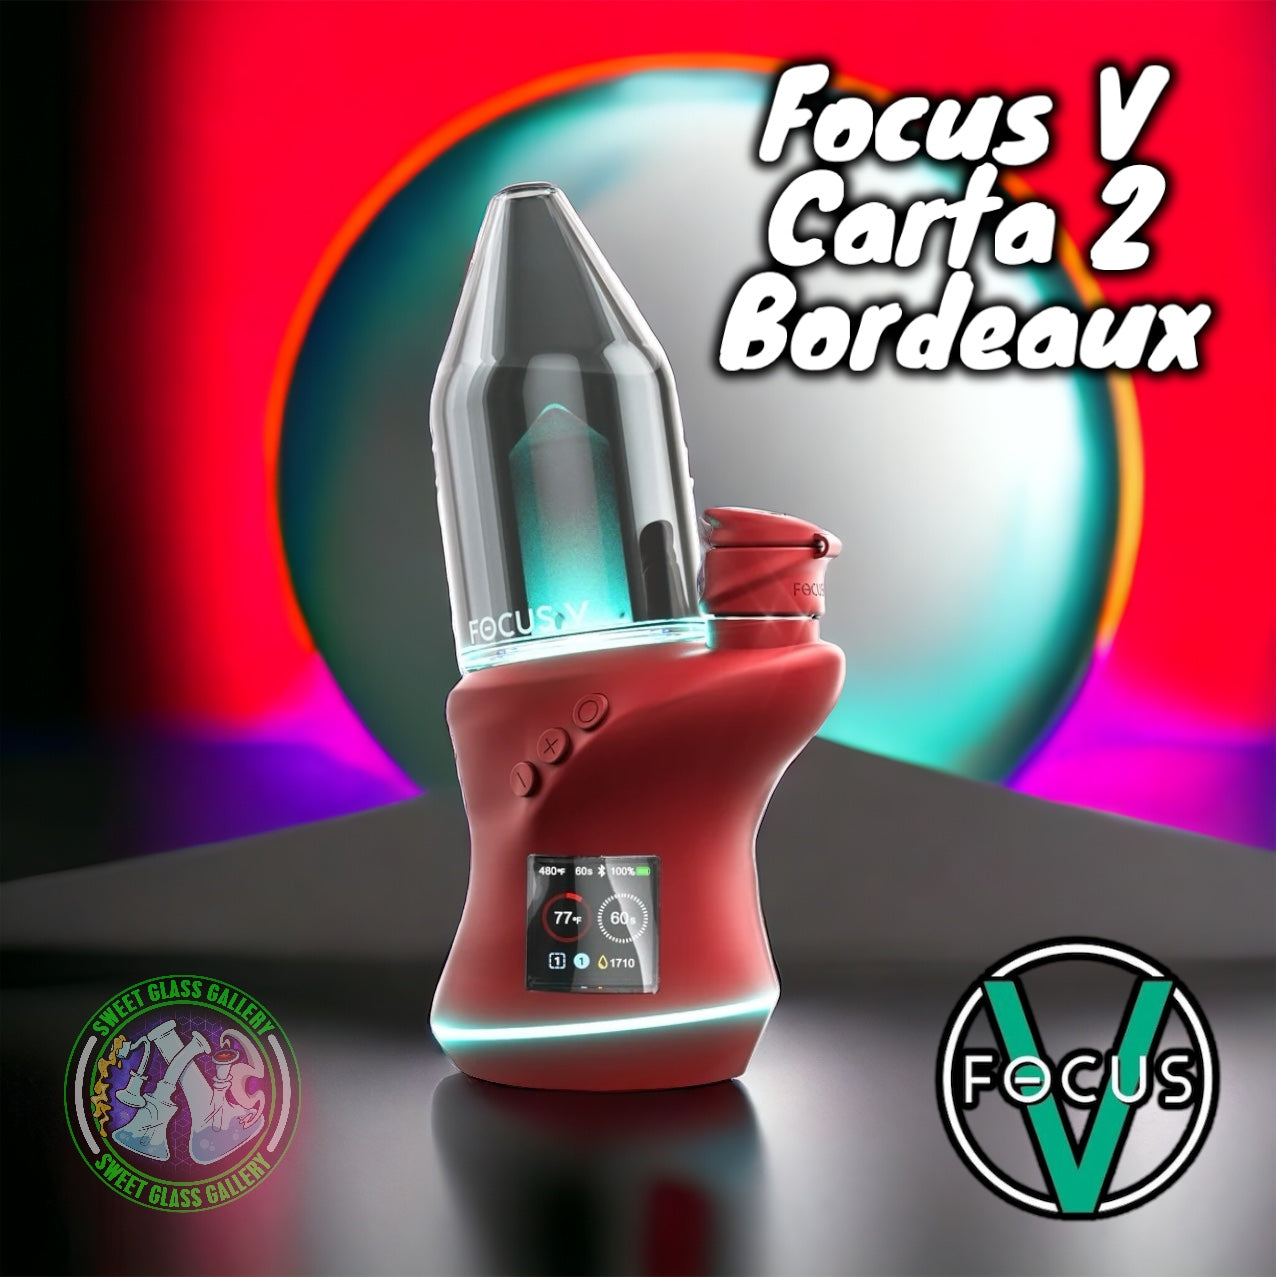 Focus V - Carta 2 Limited Edition (Bordeaux)